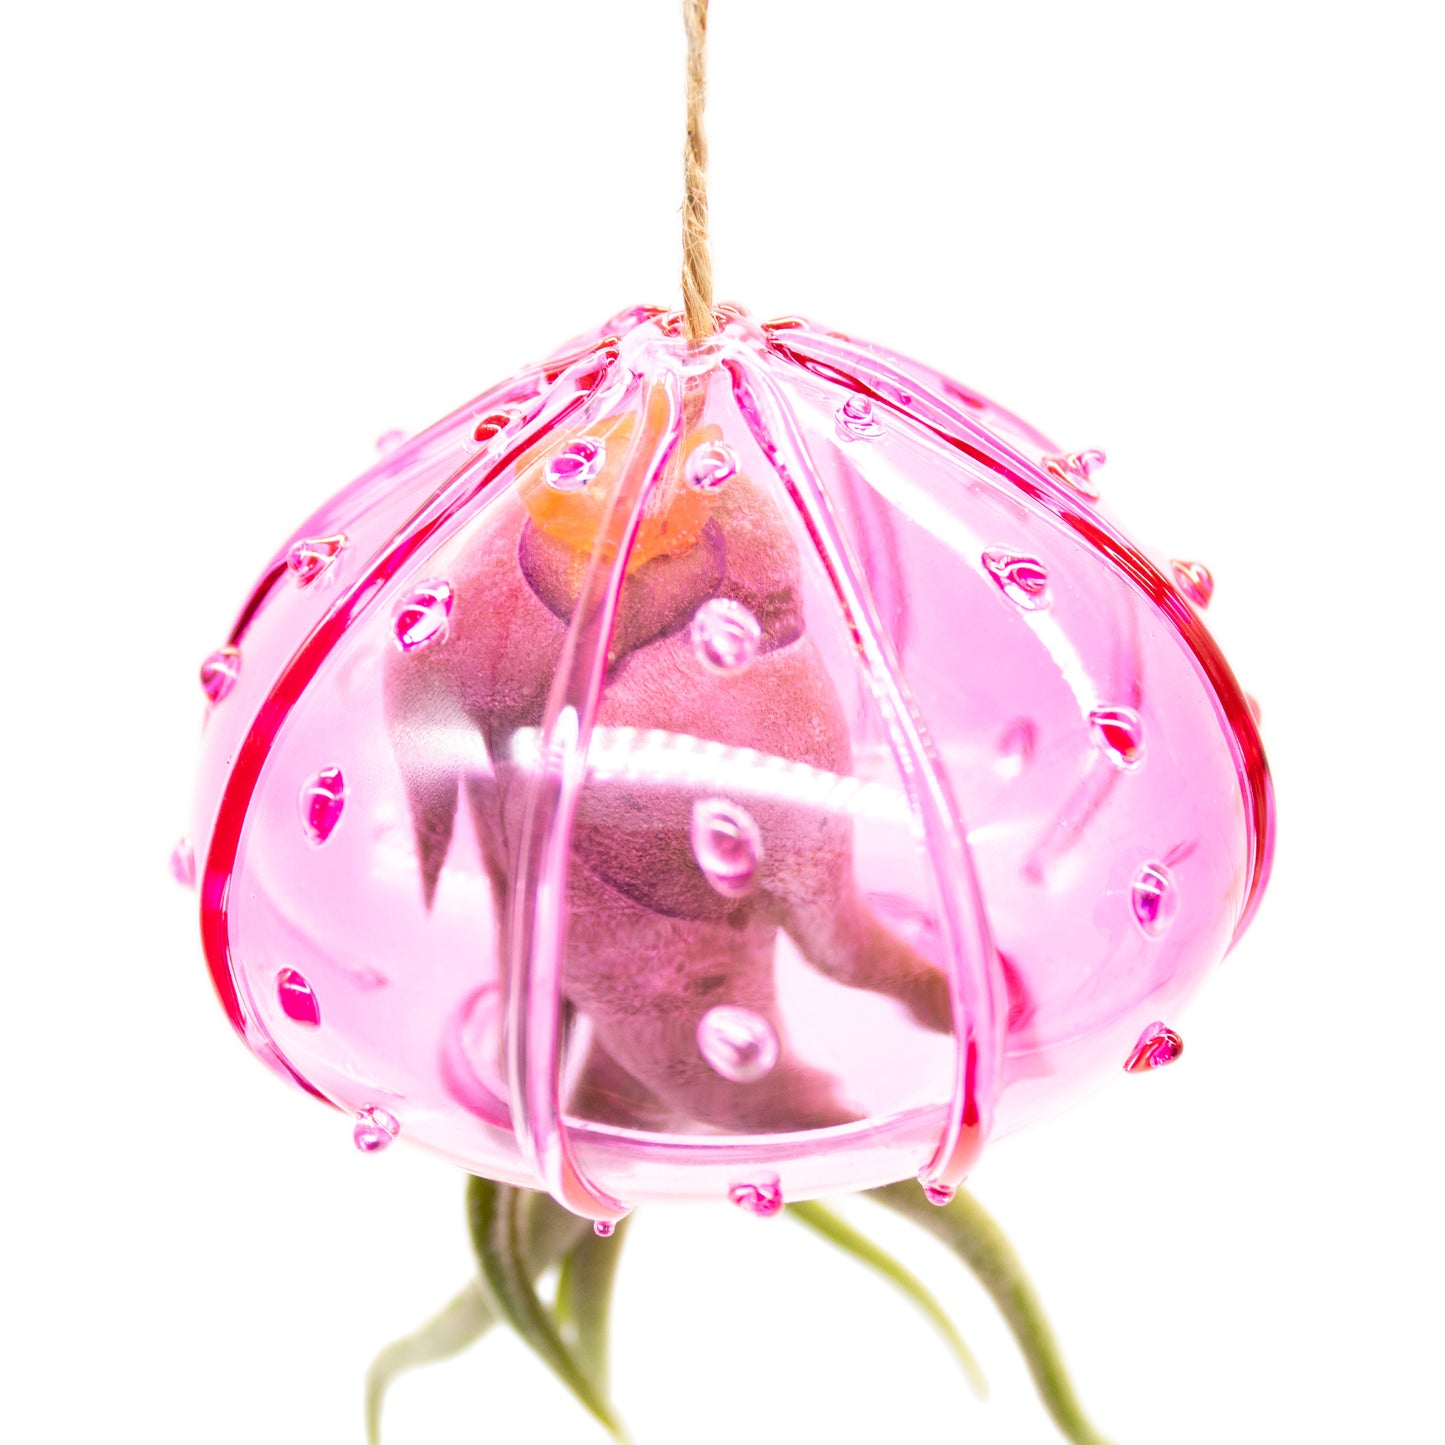 Set of 3 Hanging Glass Sea Urchin Jellyfish Arrangement